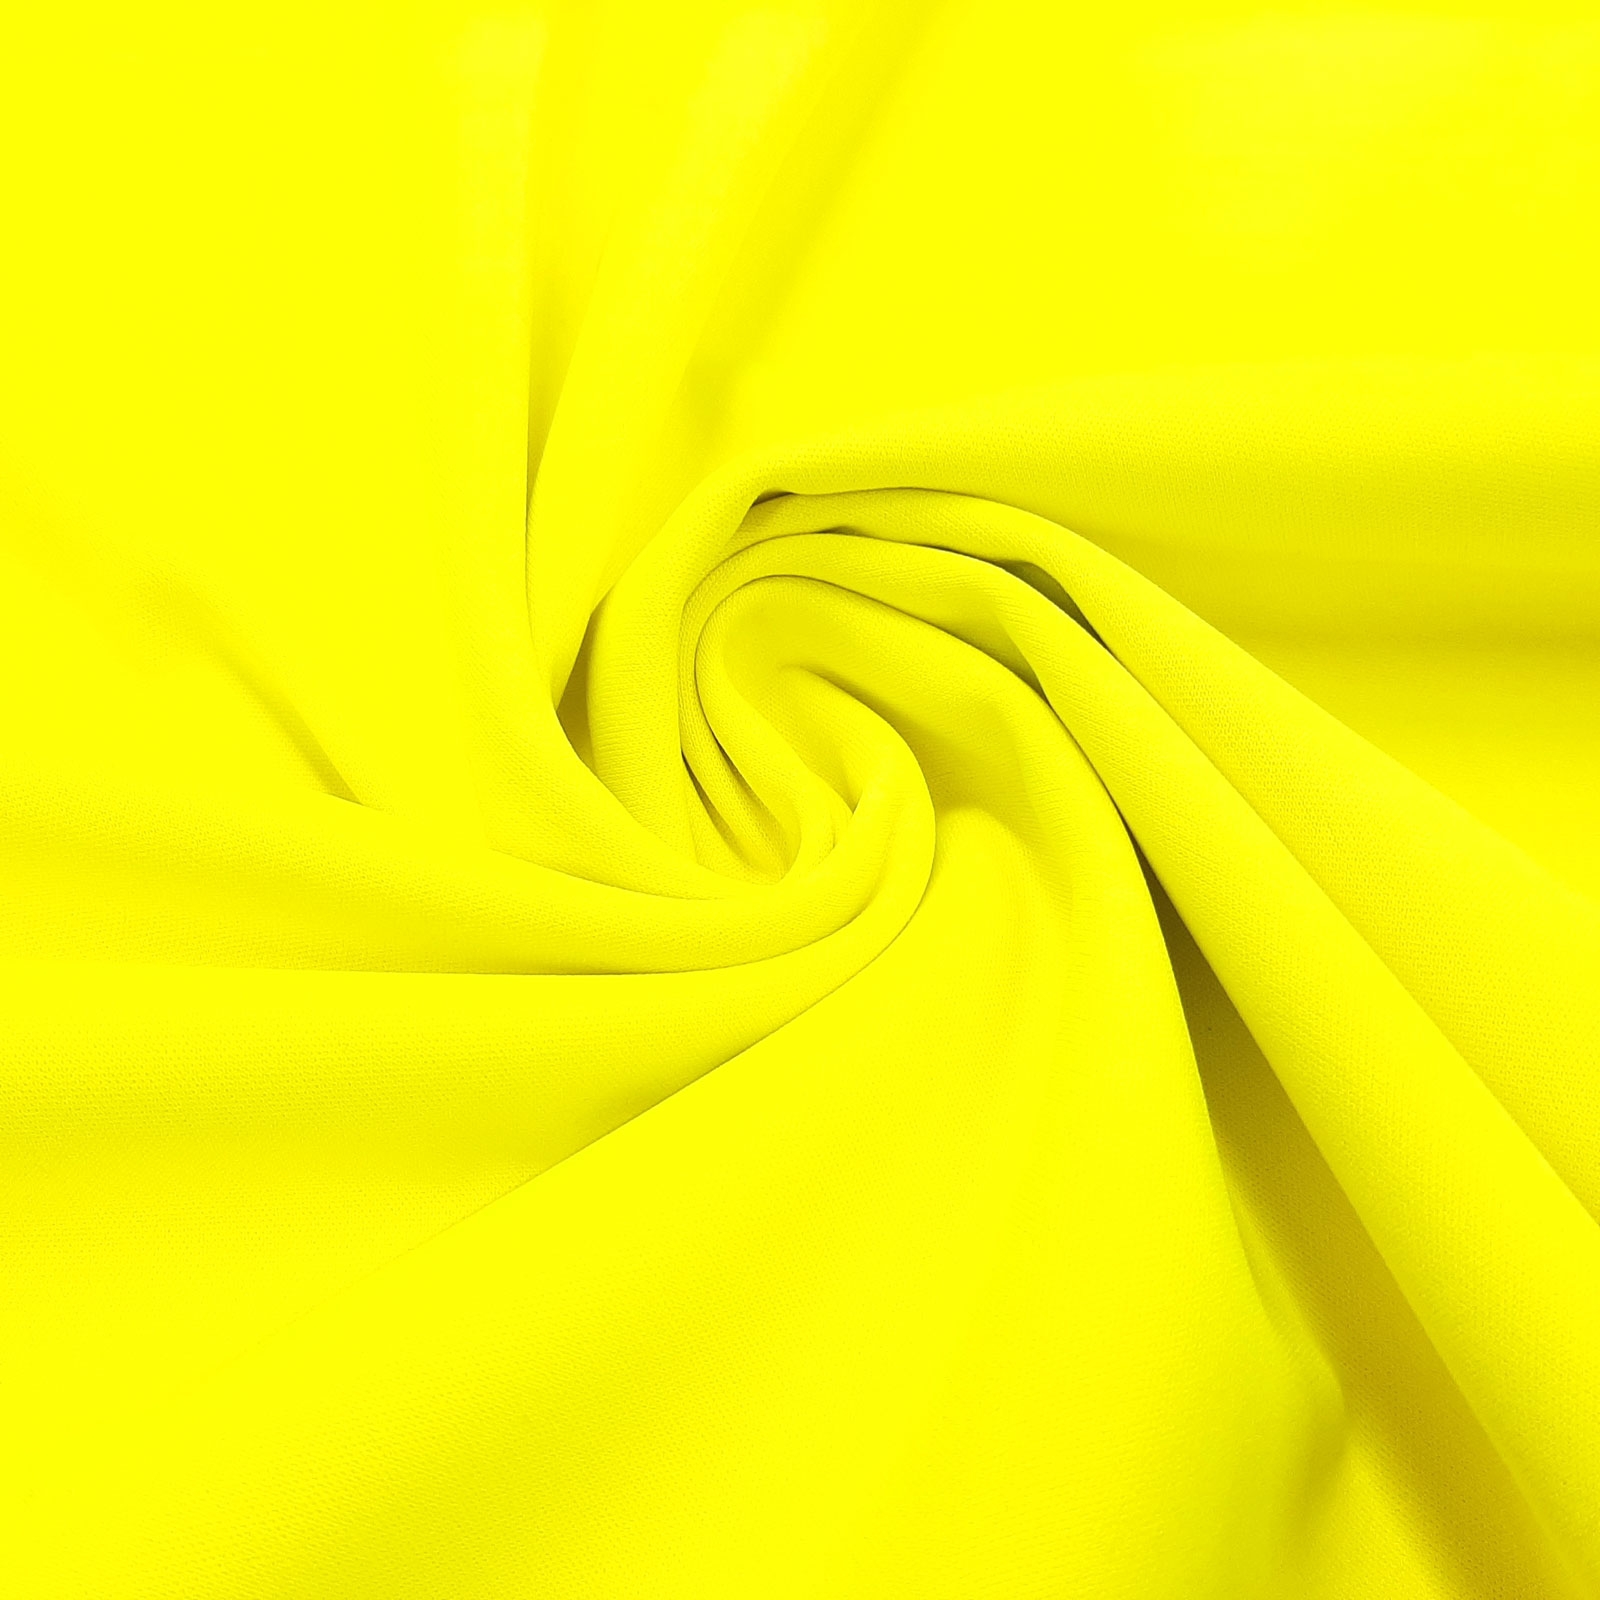 Softshell Logan - extra soft - neon yellow EN 20471 - 1B fabric